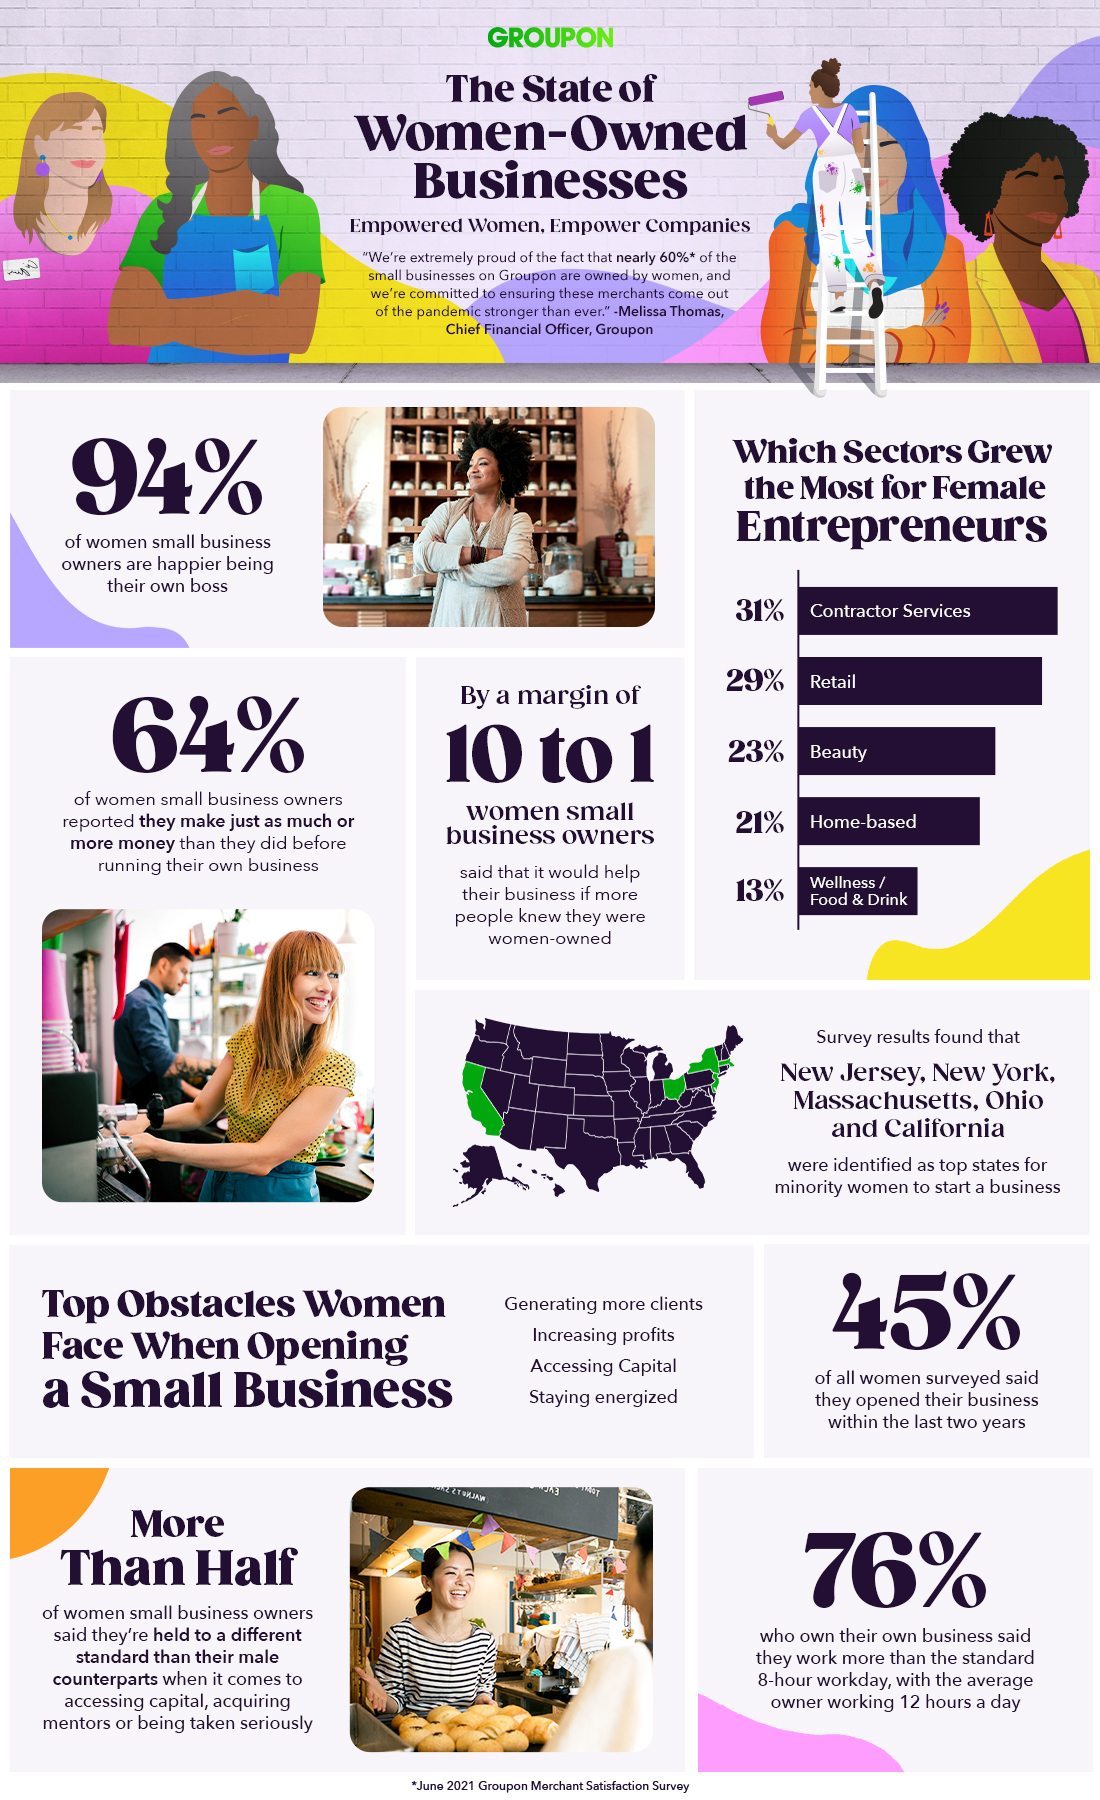 United States: The Women's Entrepreneurship and Economic